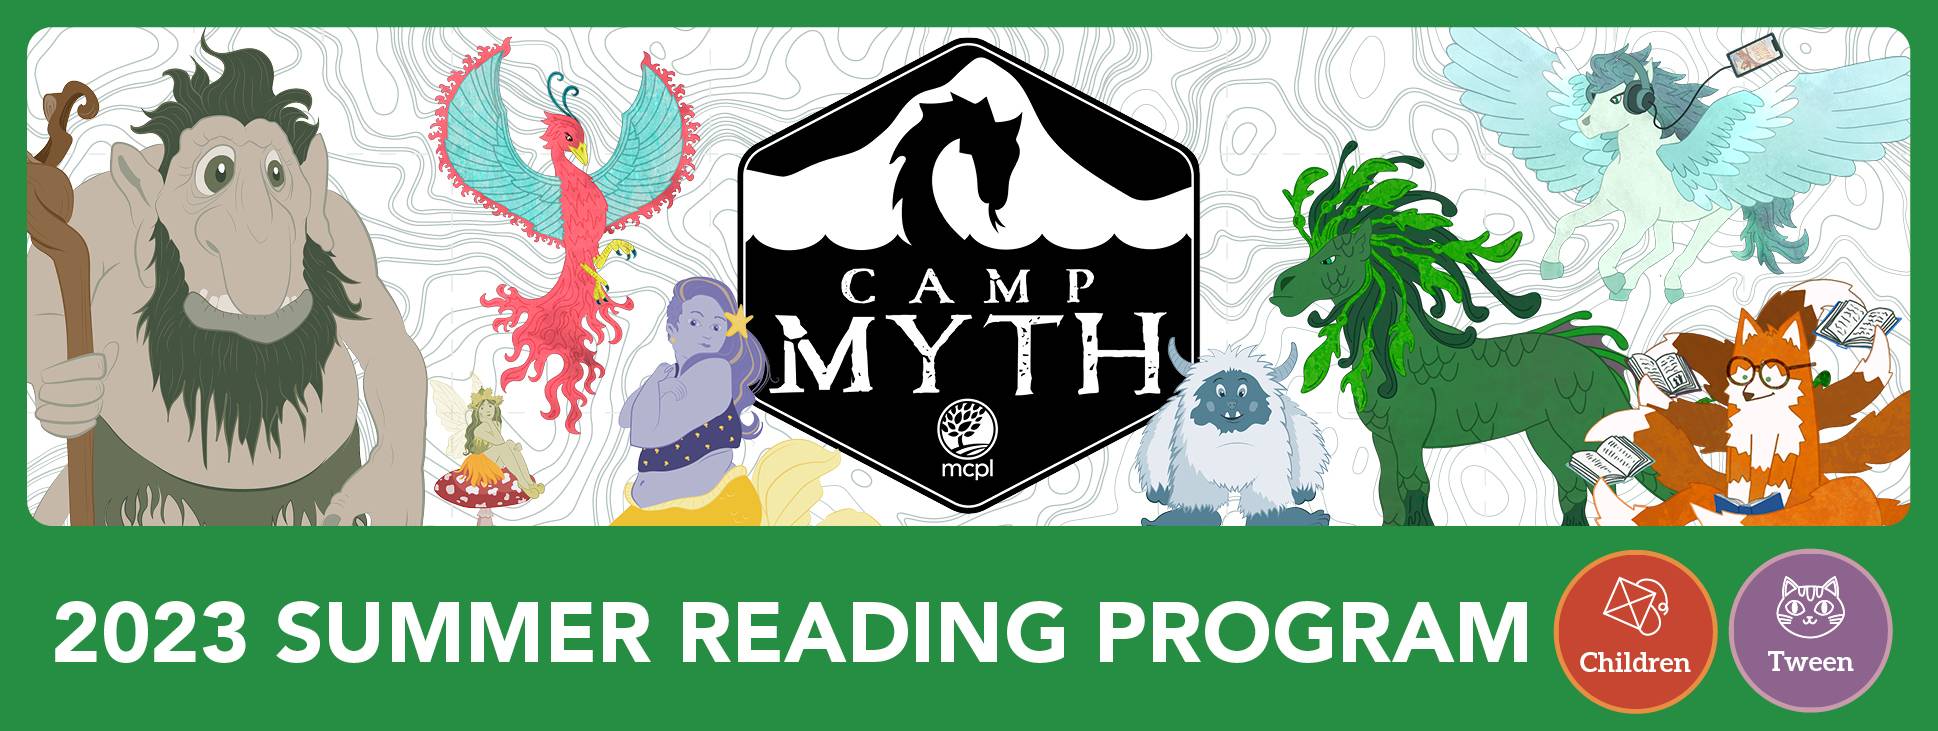 Camp Myth: 2023 Summer Reading Program